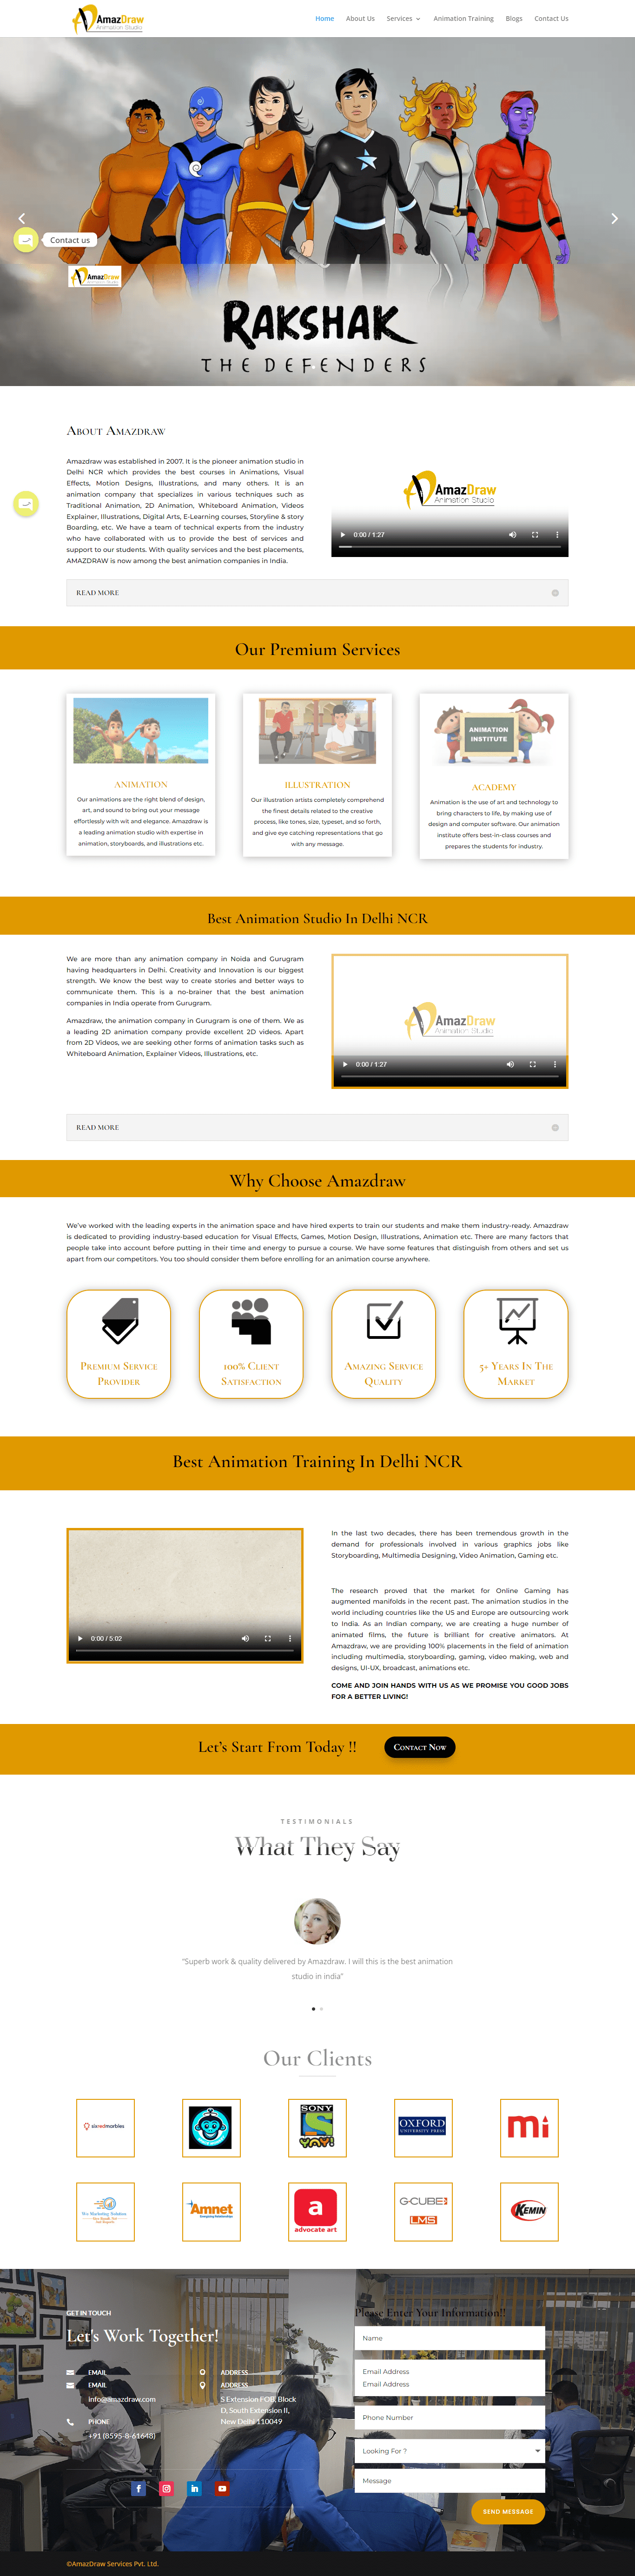 Amazdraw website |We Marketing Solution